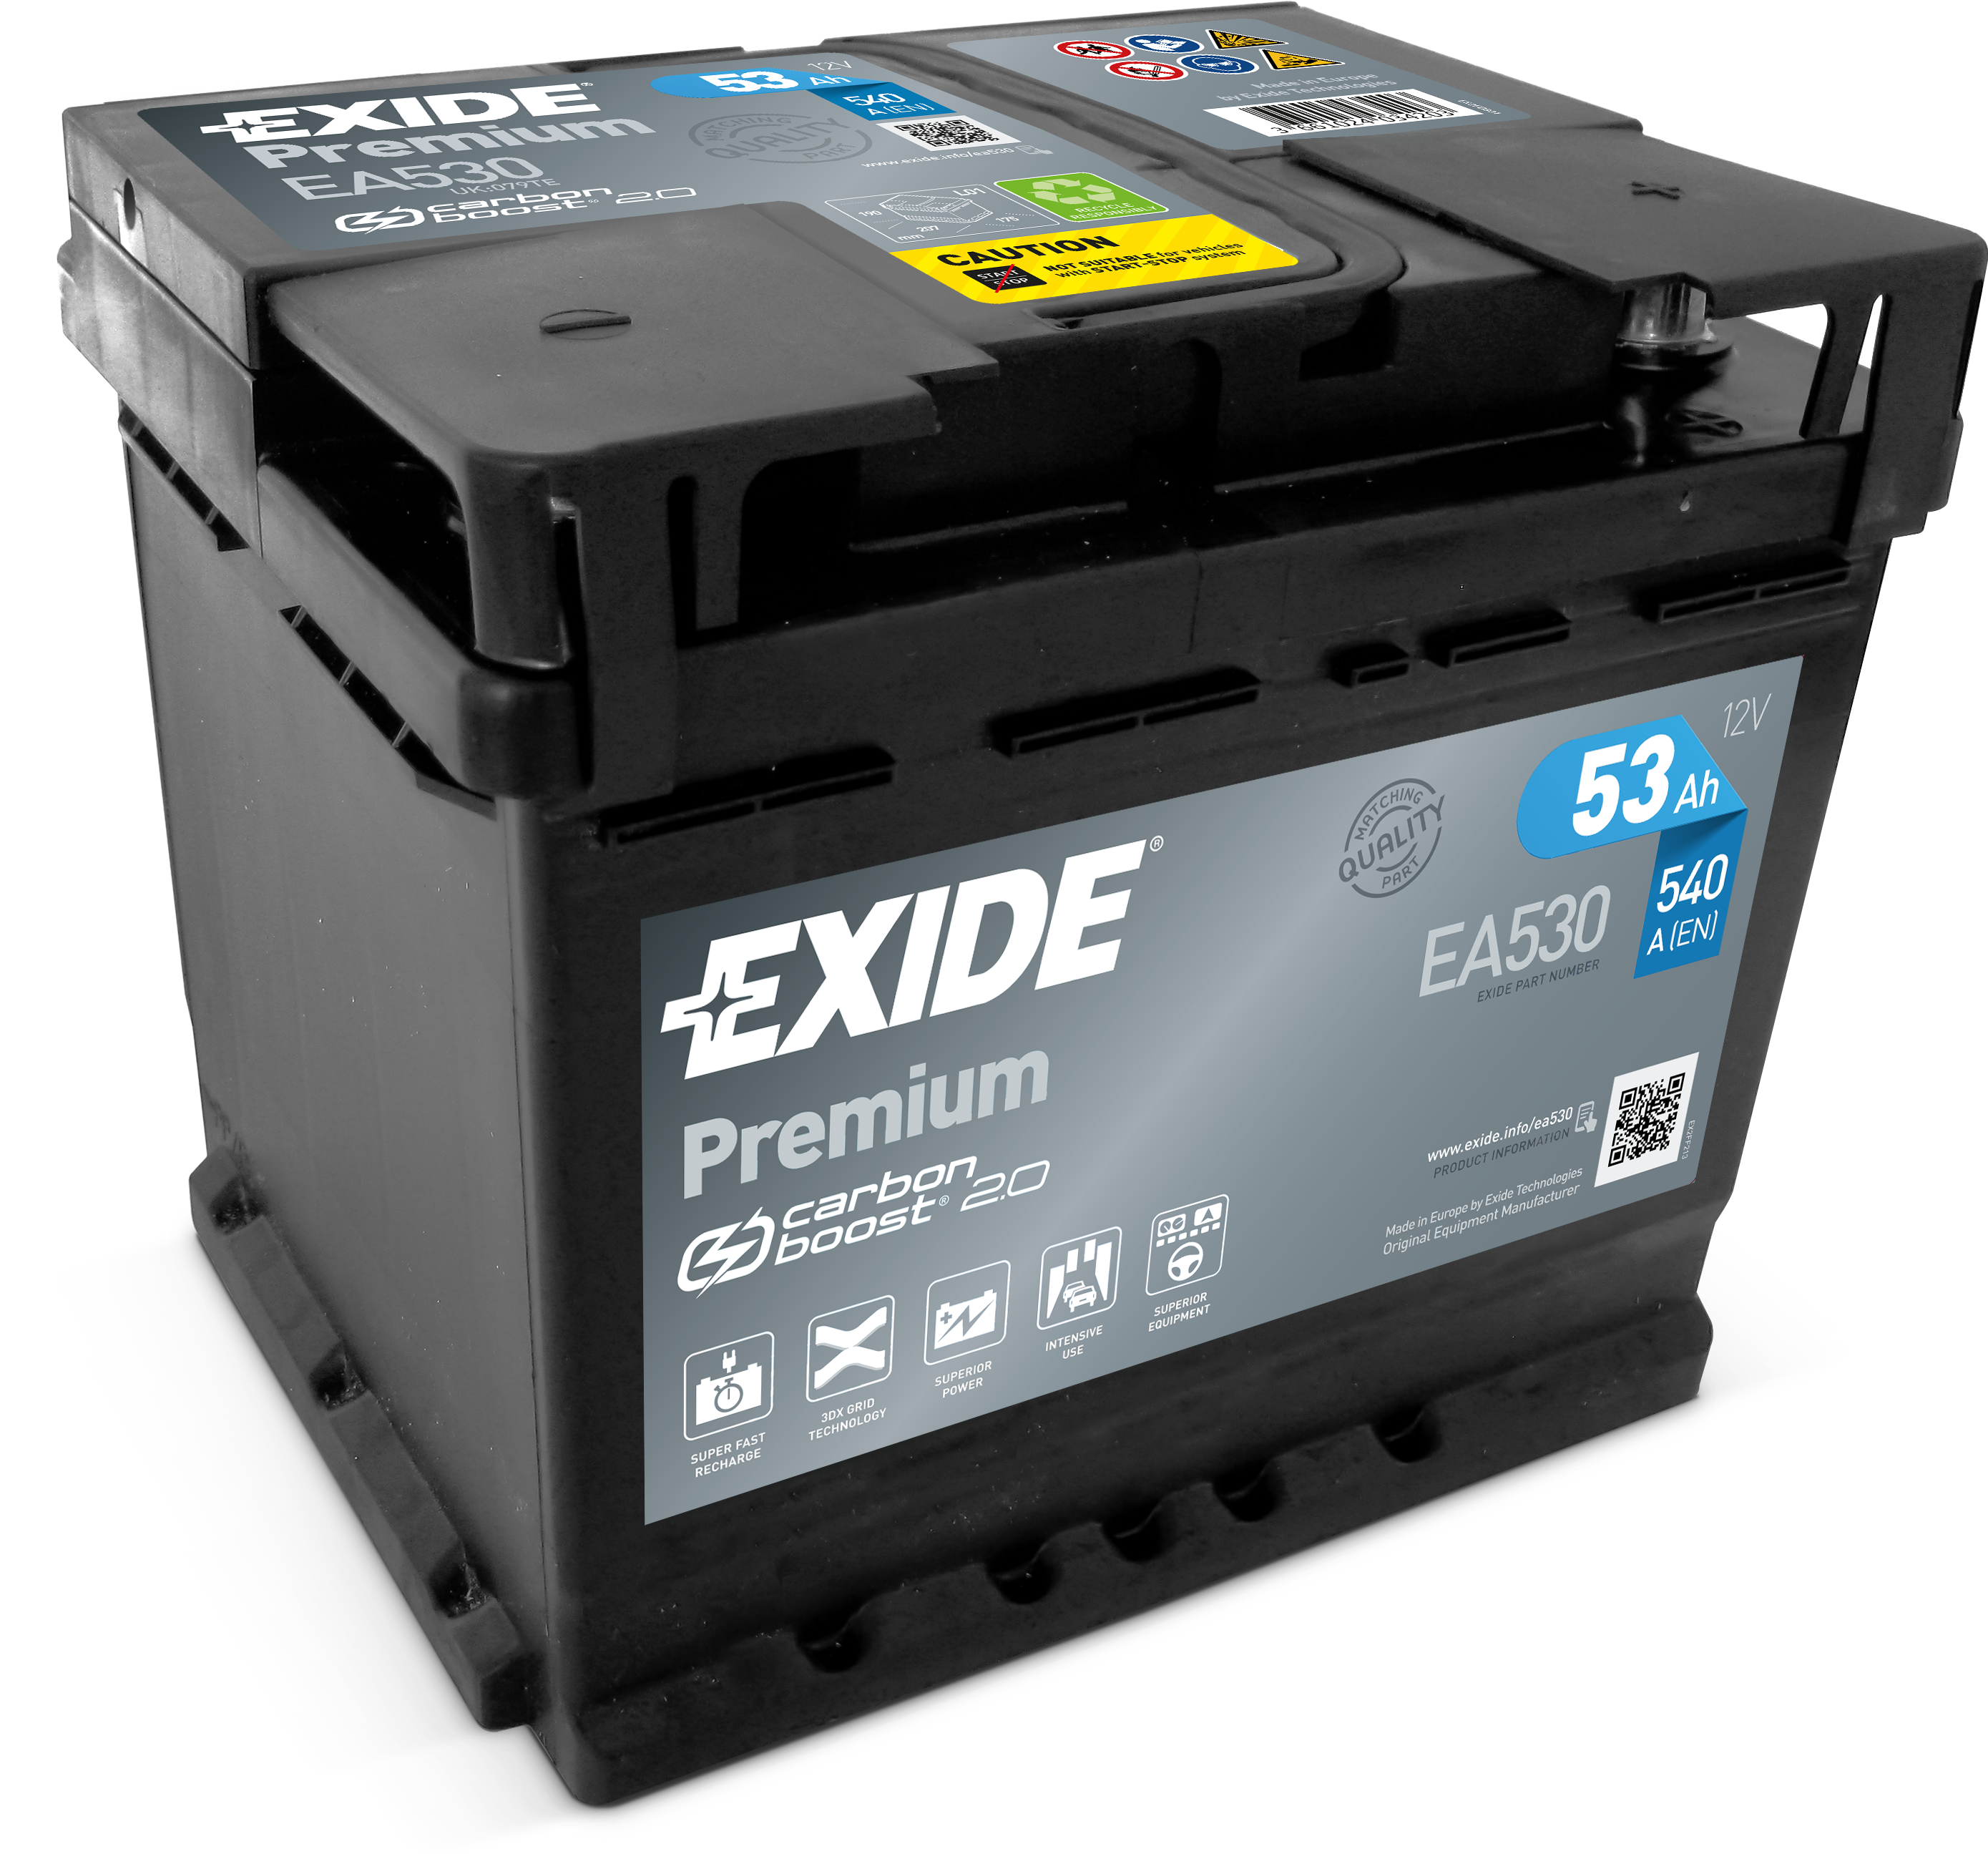 EXIDE EA530 PREMIUM 53Ah Carbon Boost